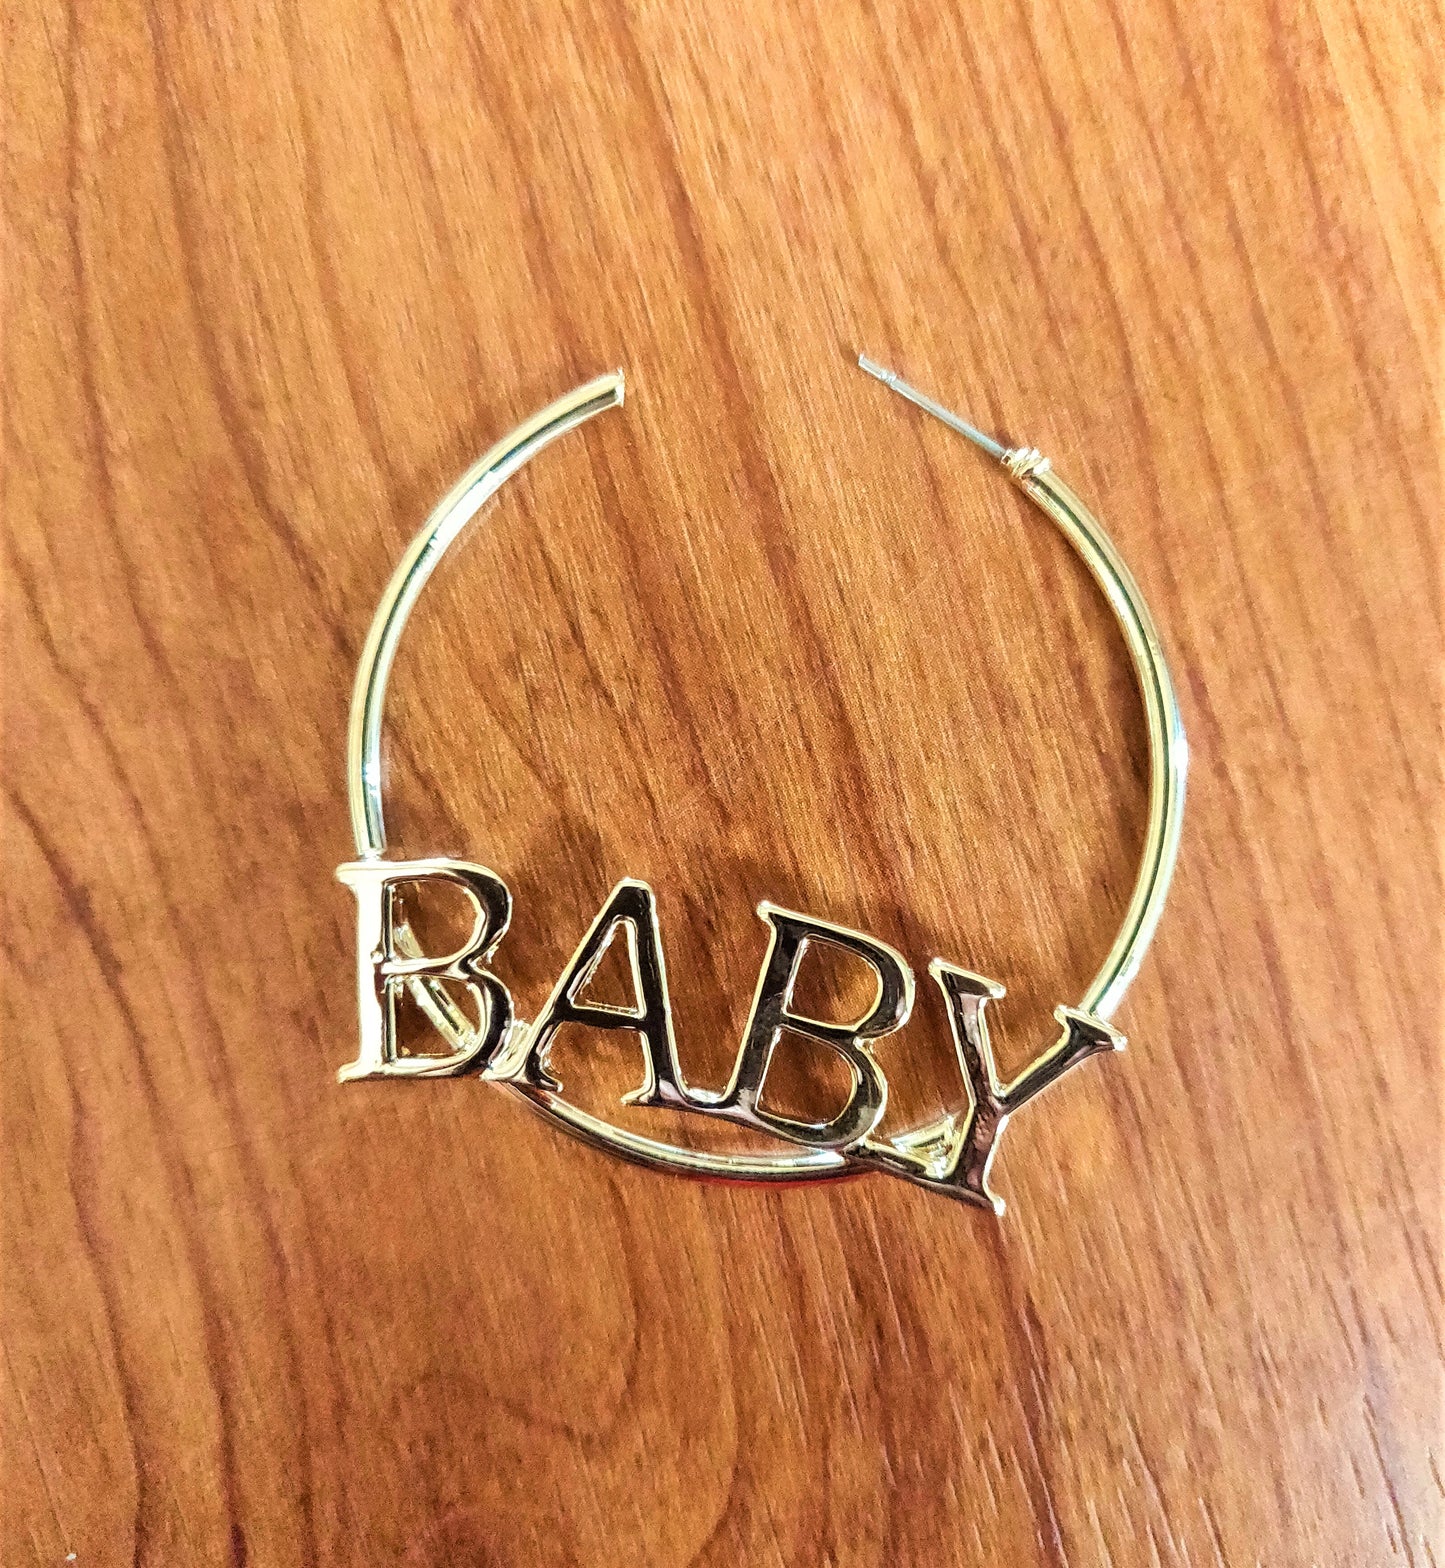 BABY Scripted Earring - GlitterGleam